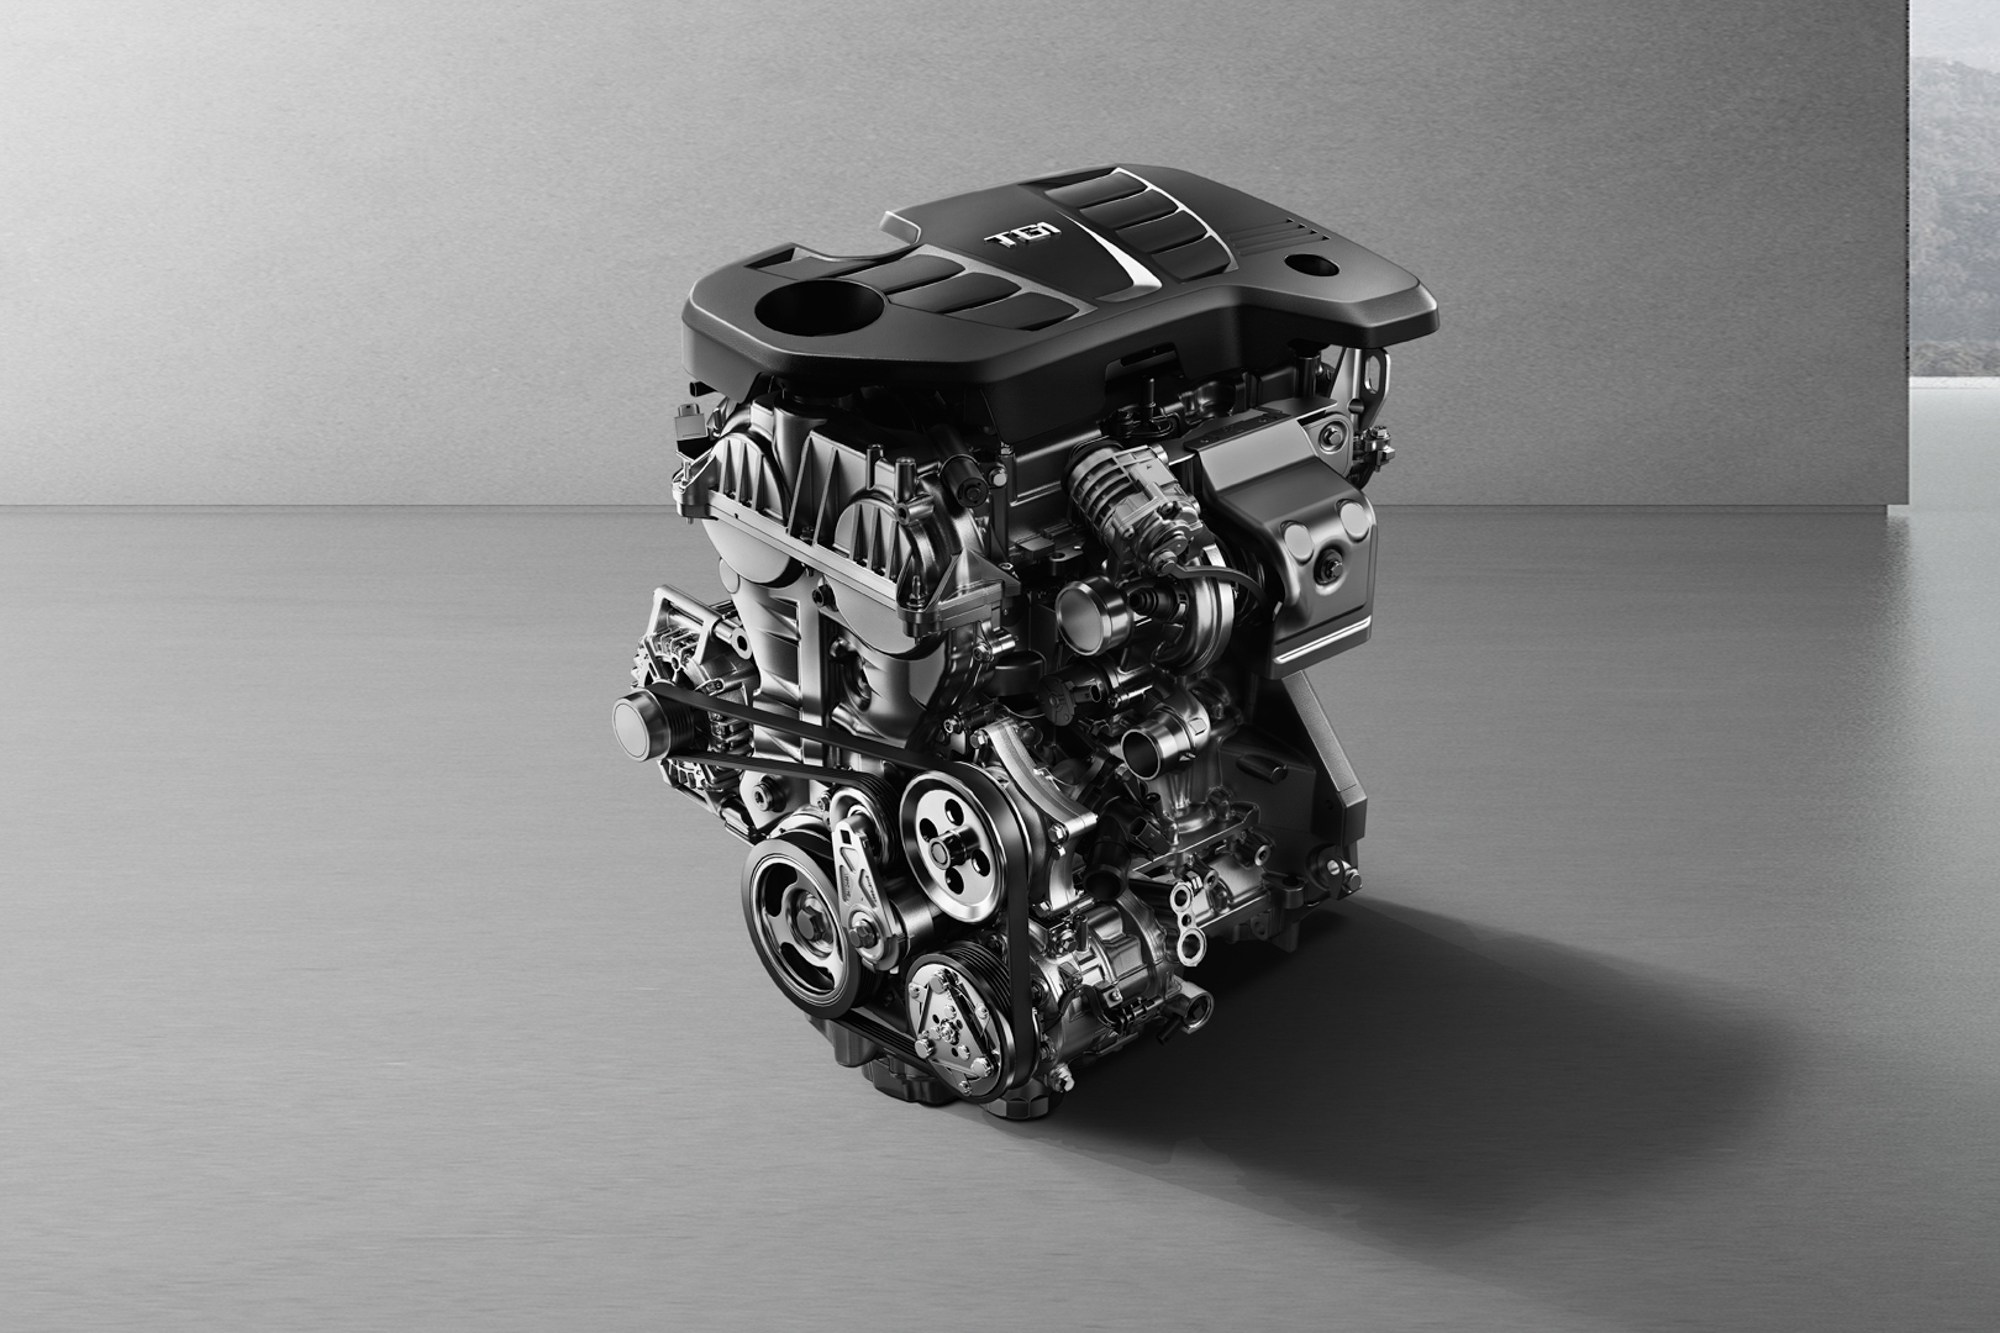 HS 1.5T 旗艦版採用 MEGA Tech 1.5T 缸內直噴渦輪增壓汽油引擎，可提供最大馬力 180ps /5,600rpm 與最大扭力 29.1kgm/1,500~4,000rpm 的動力輸出。